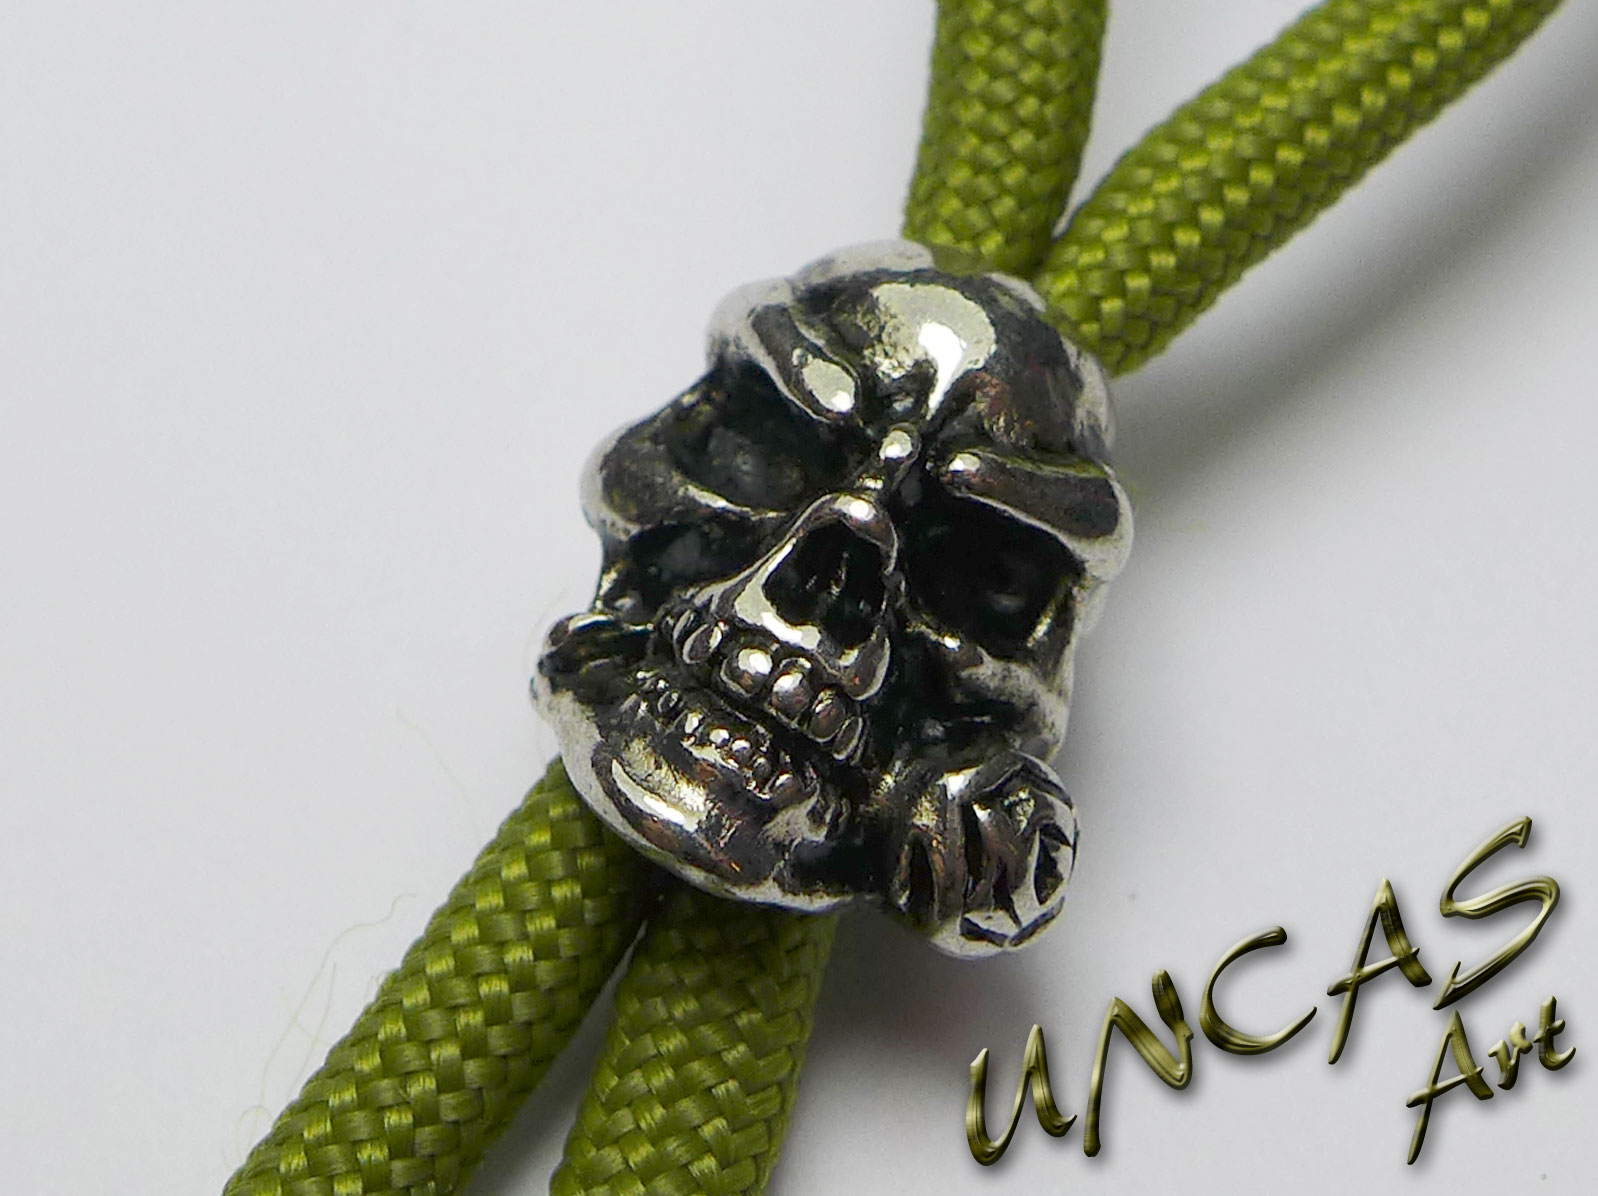 Skull mit Rose Metall Totenkopf Perle Beads für Paracord Lanyard Keychains 